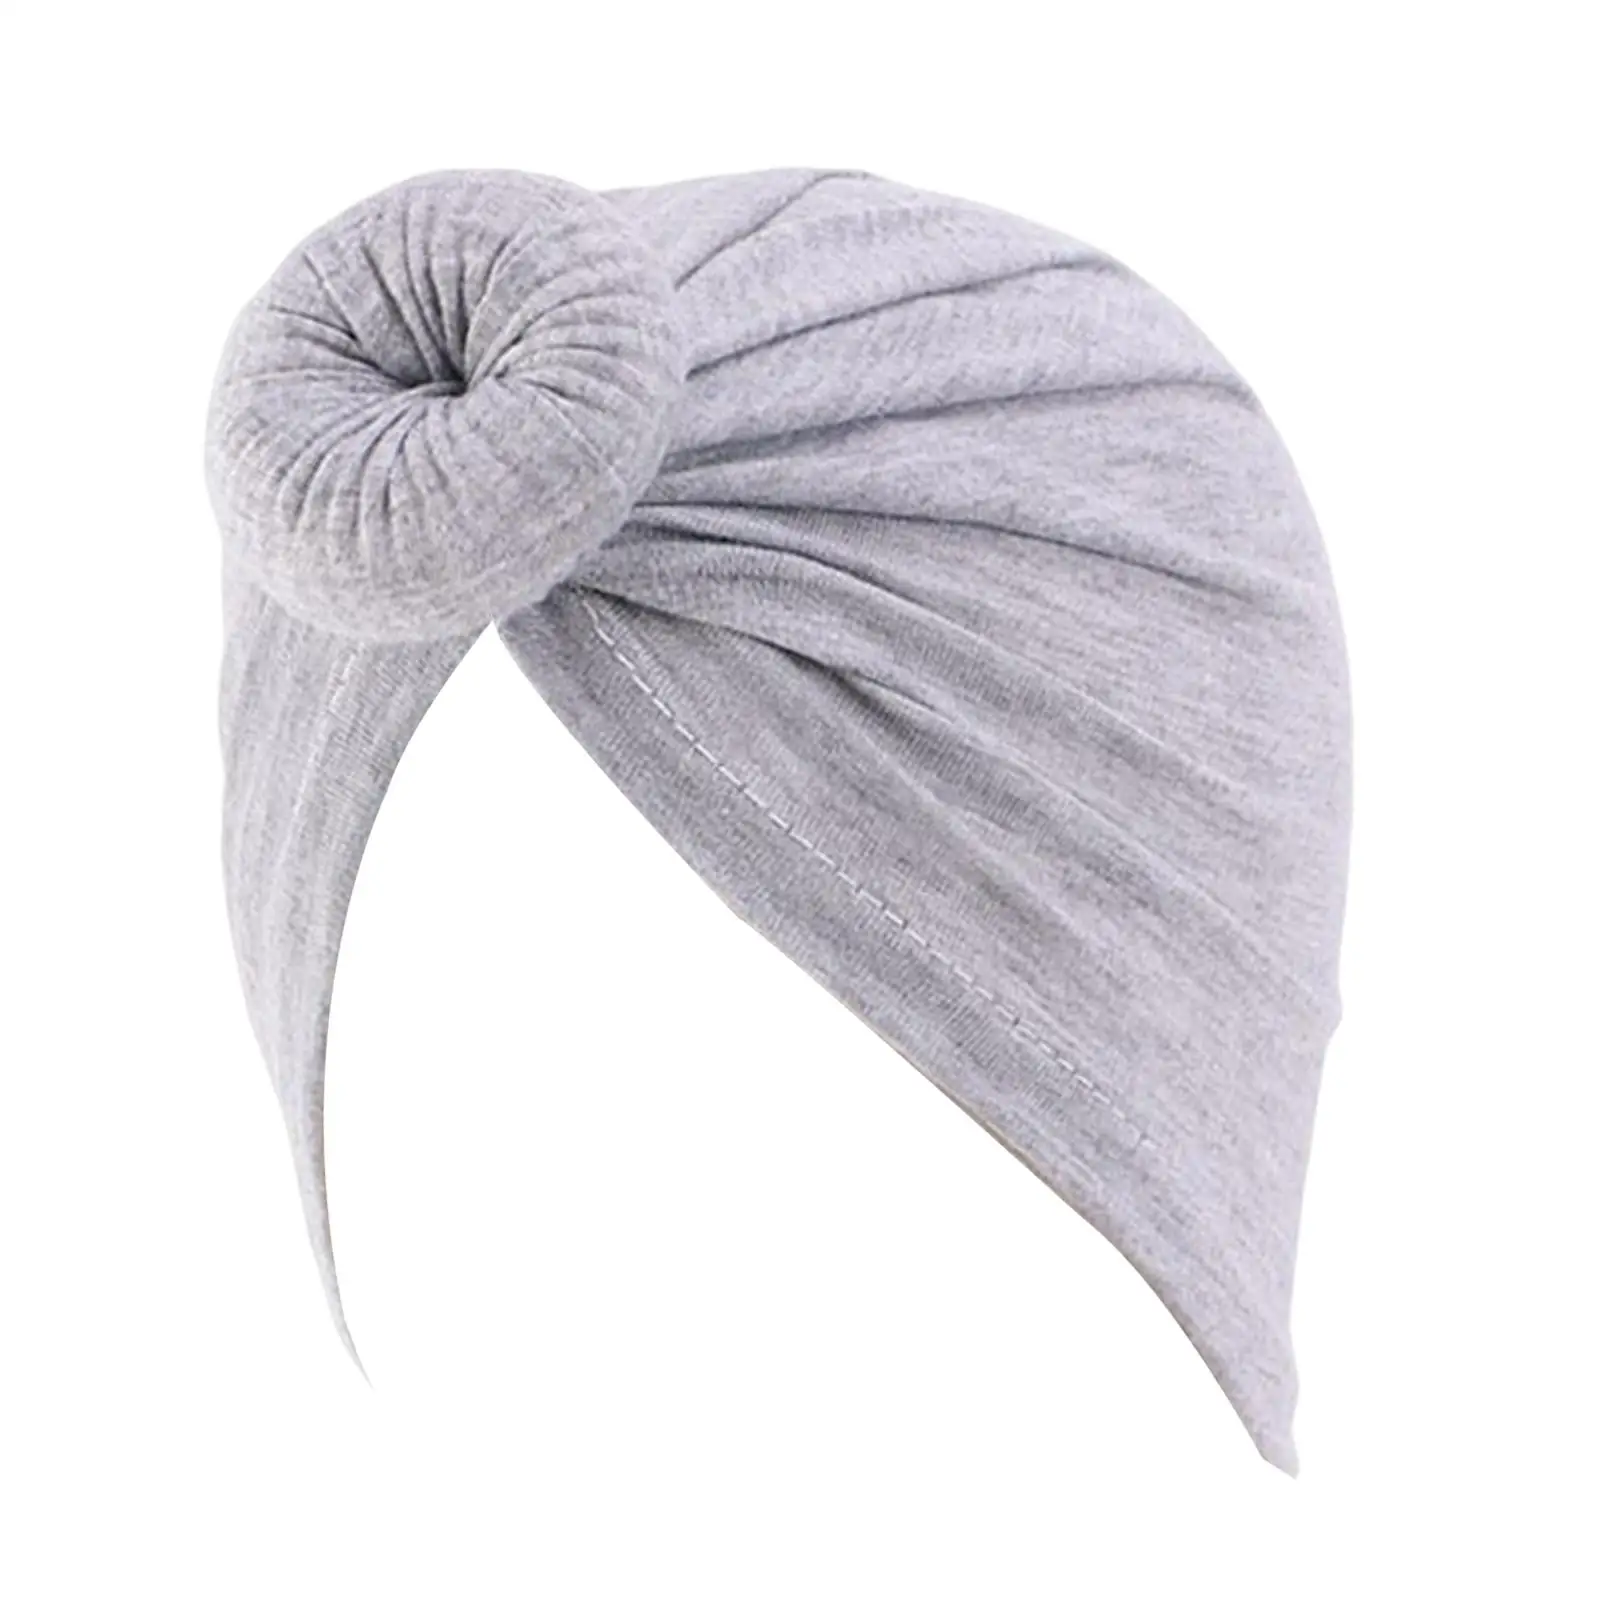 Donut Head Wrap Headband Windproof Headwear Sweet Protective